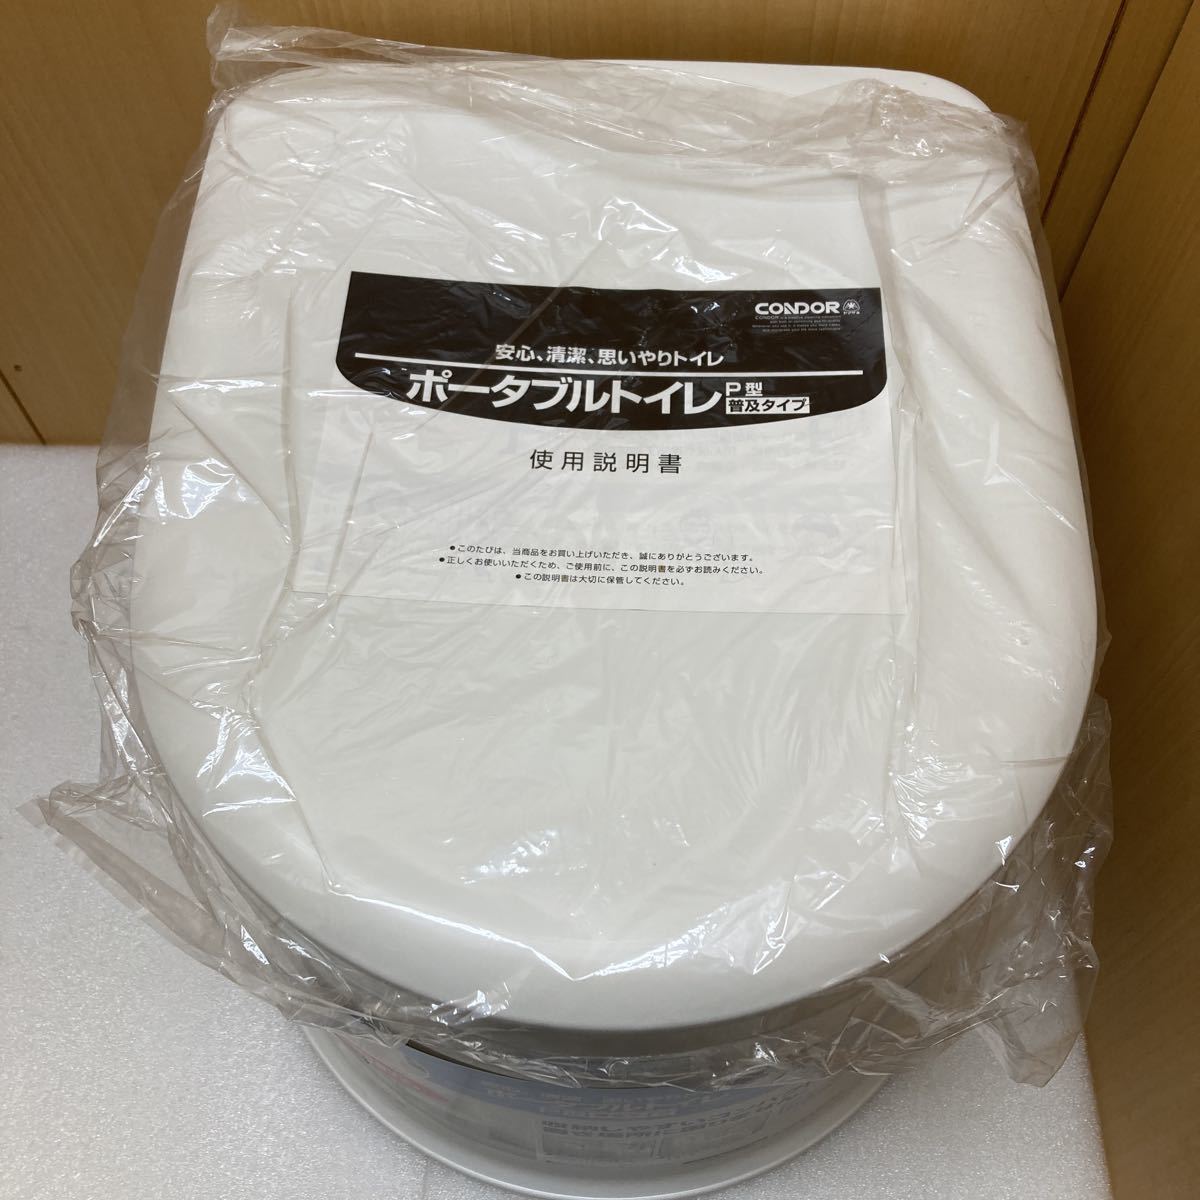 GXL9005 Yamazaki industry corporation portable toilet P type ( poly- Pro pi Len made ) unused storage goods 1020